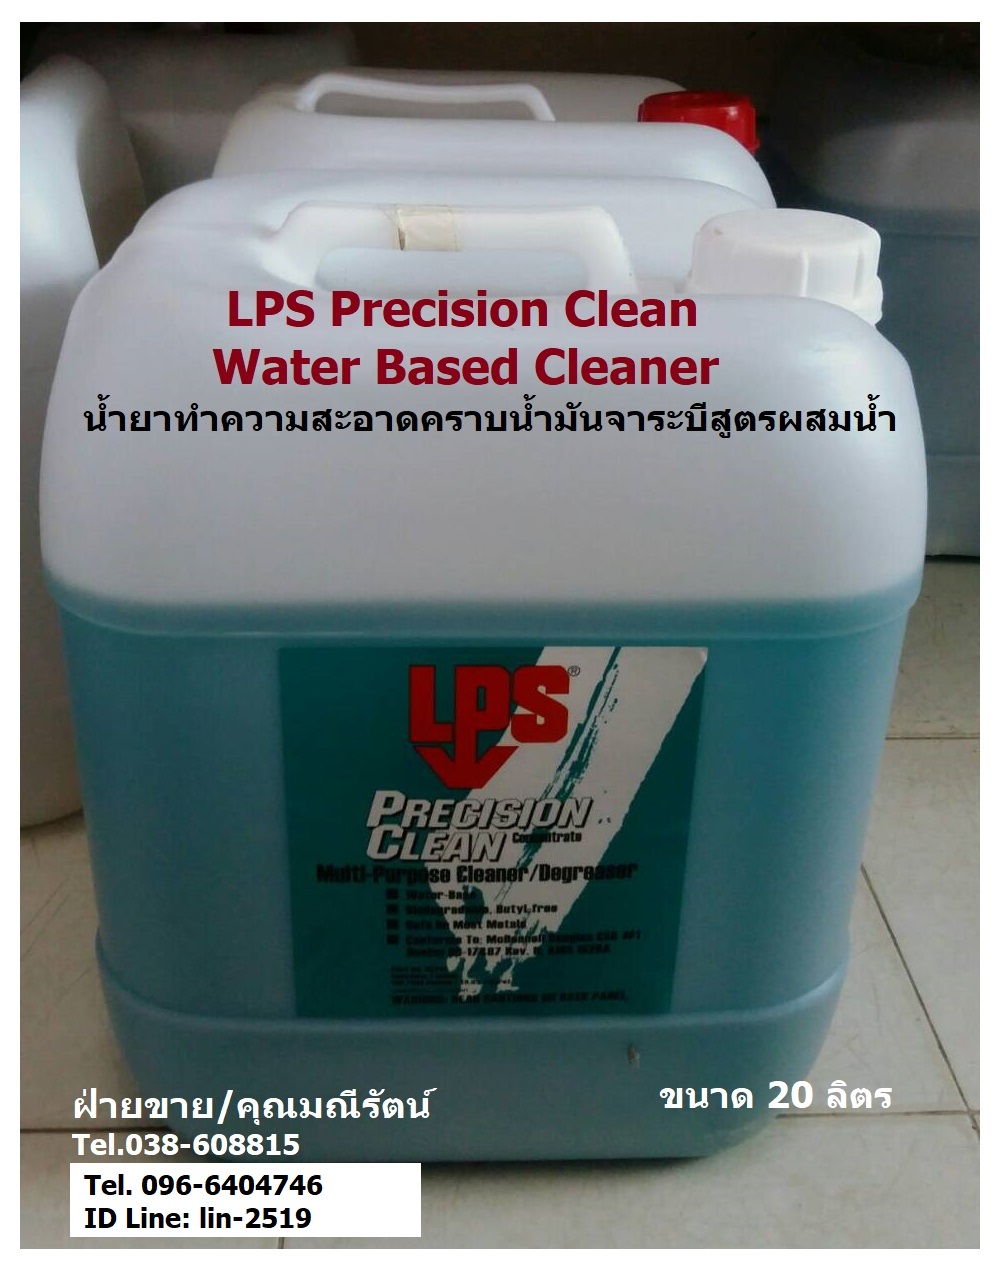 LPS Precision Clean Water-Based Cleaner น้ำยาทำความสะอาดคราบน้ำมันจาระบีเอนกประสงค์สูตรเข้มข้นผสมน้ำ ย่อยสลายตามธรรมชาติ ปลอดภัยกับทุกวัสดุ รูปที่ 1